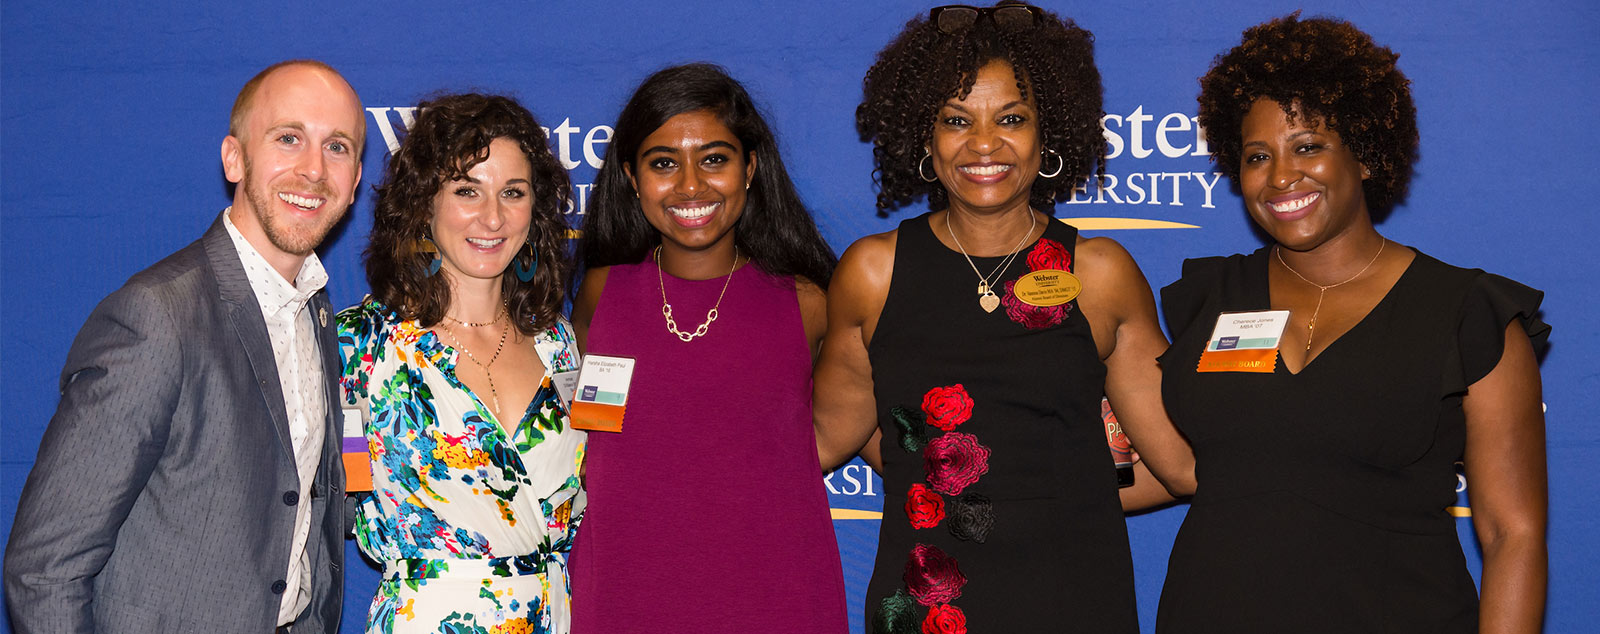 Five Webster alumni of diverse age, race, gender, and nationality pose together at the Alumni Awards celebration.